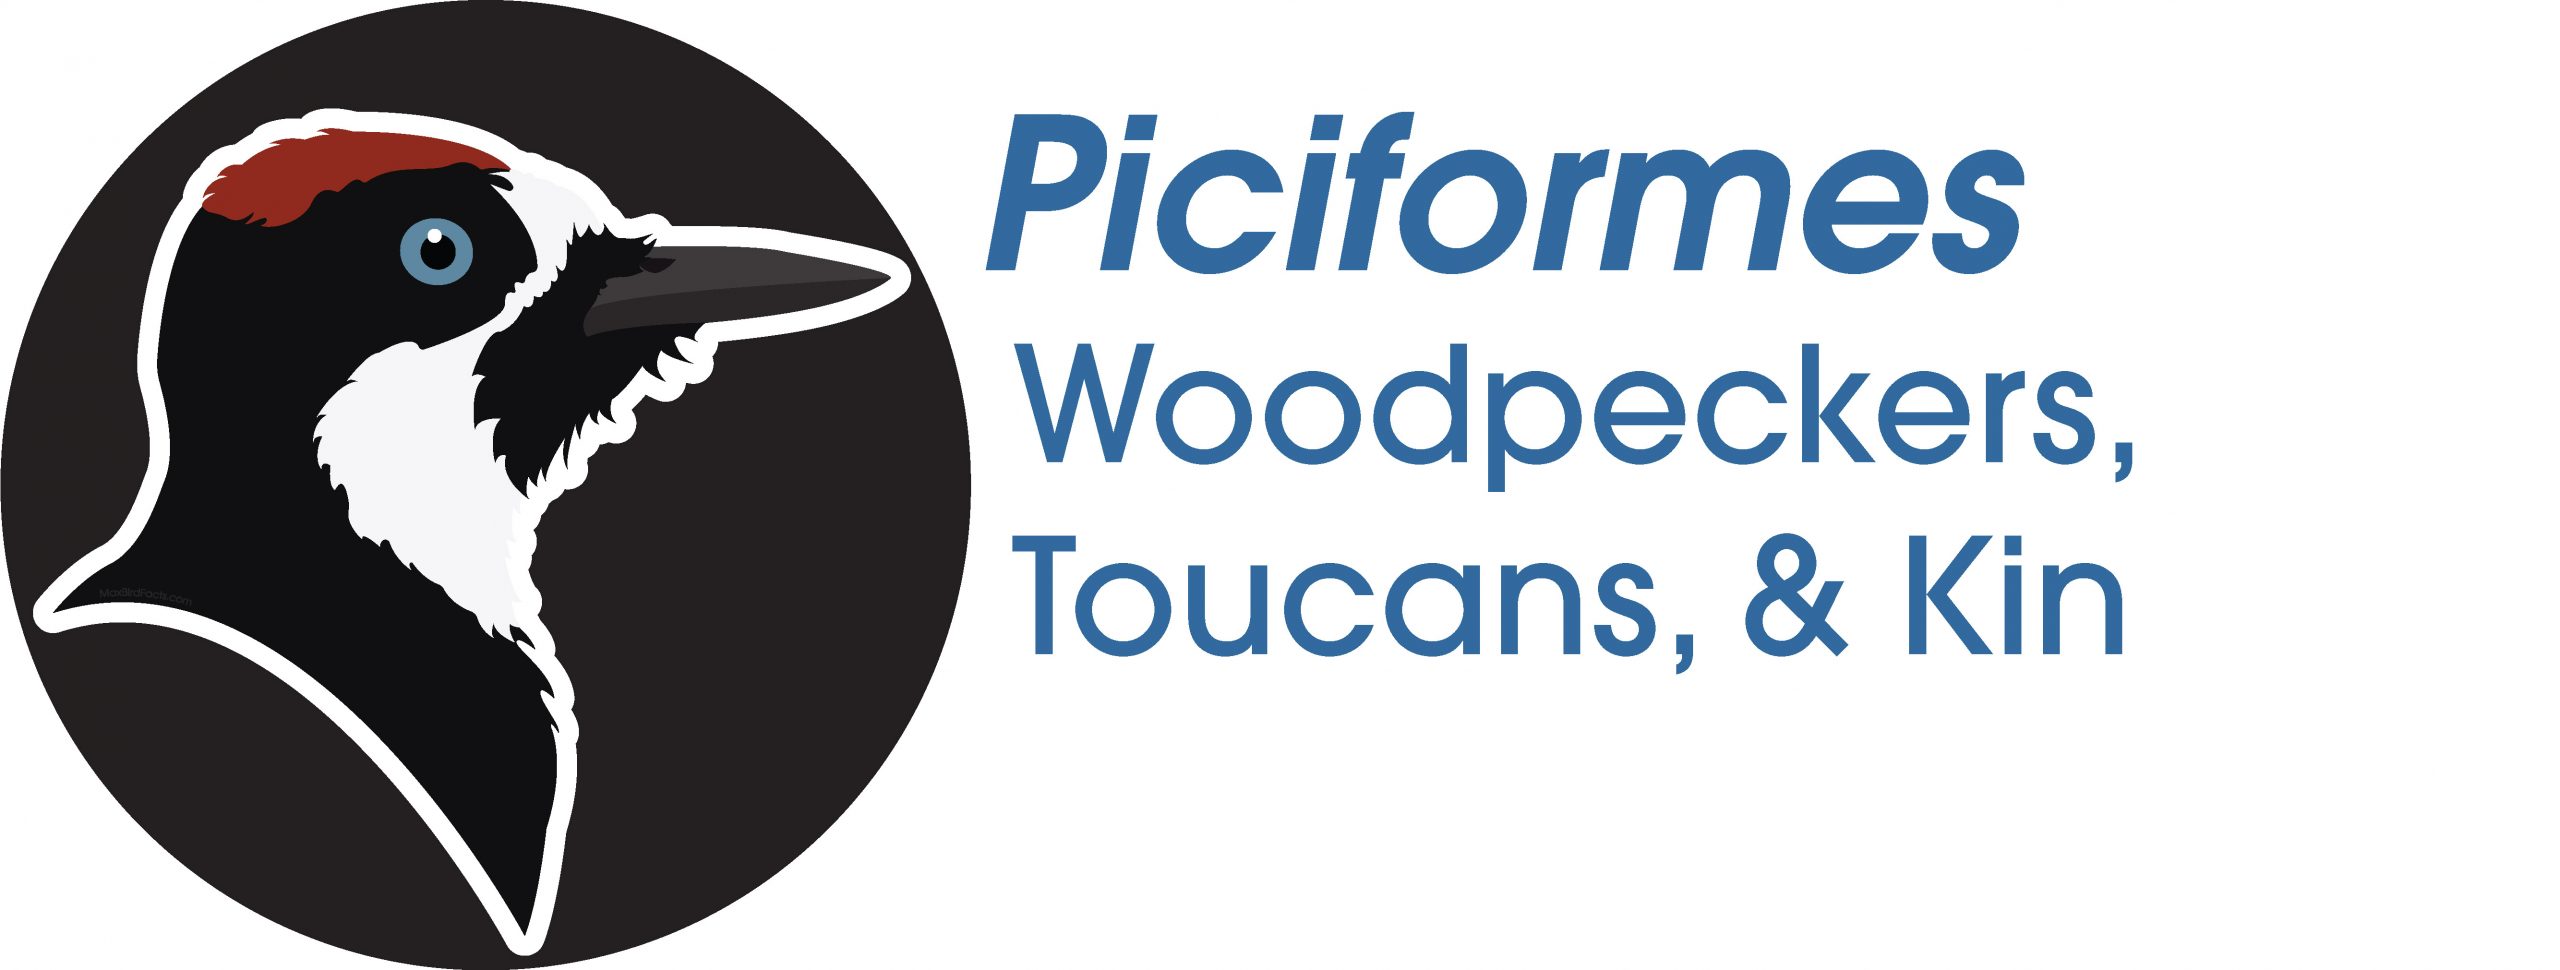 Piciformes
Woodpeckers, Toucans, and Kin
Acorn Woodpecker